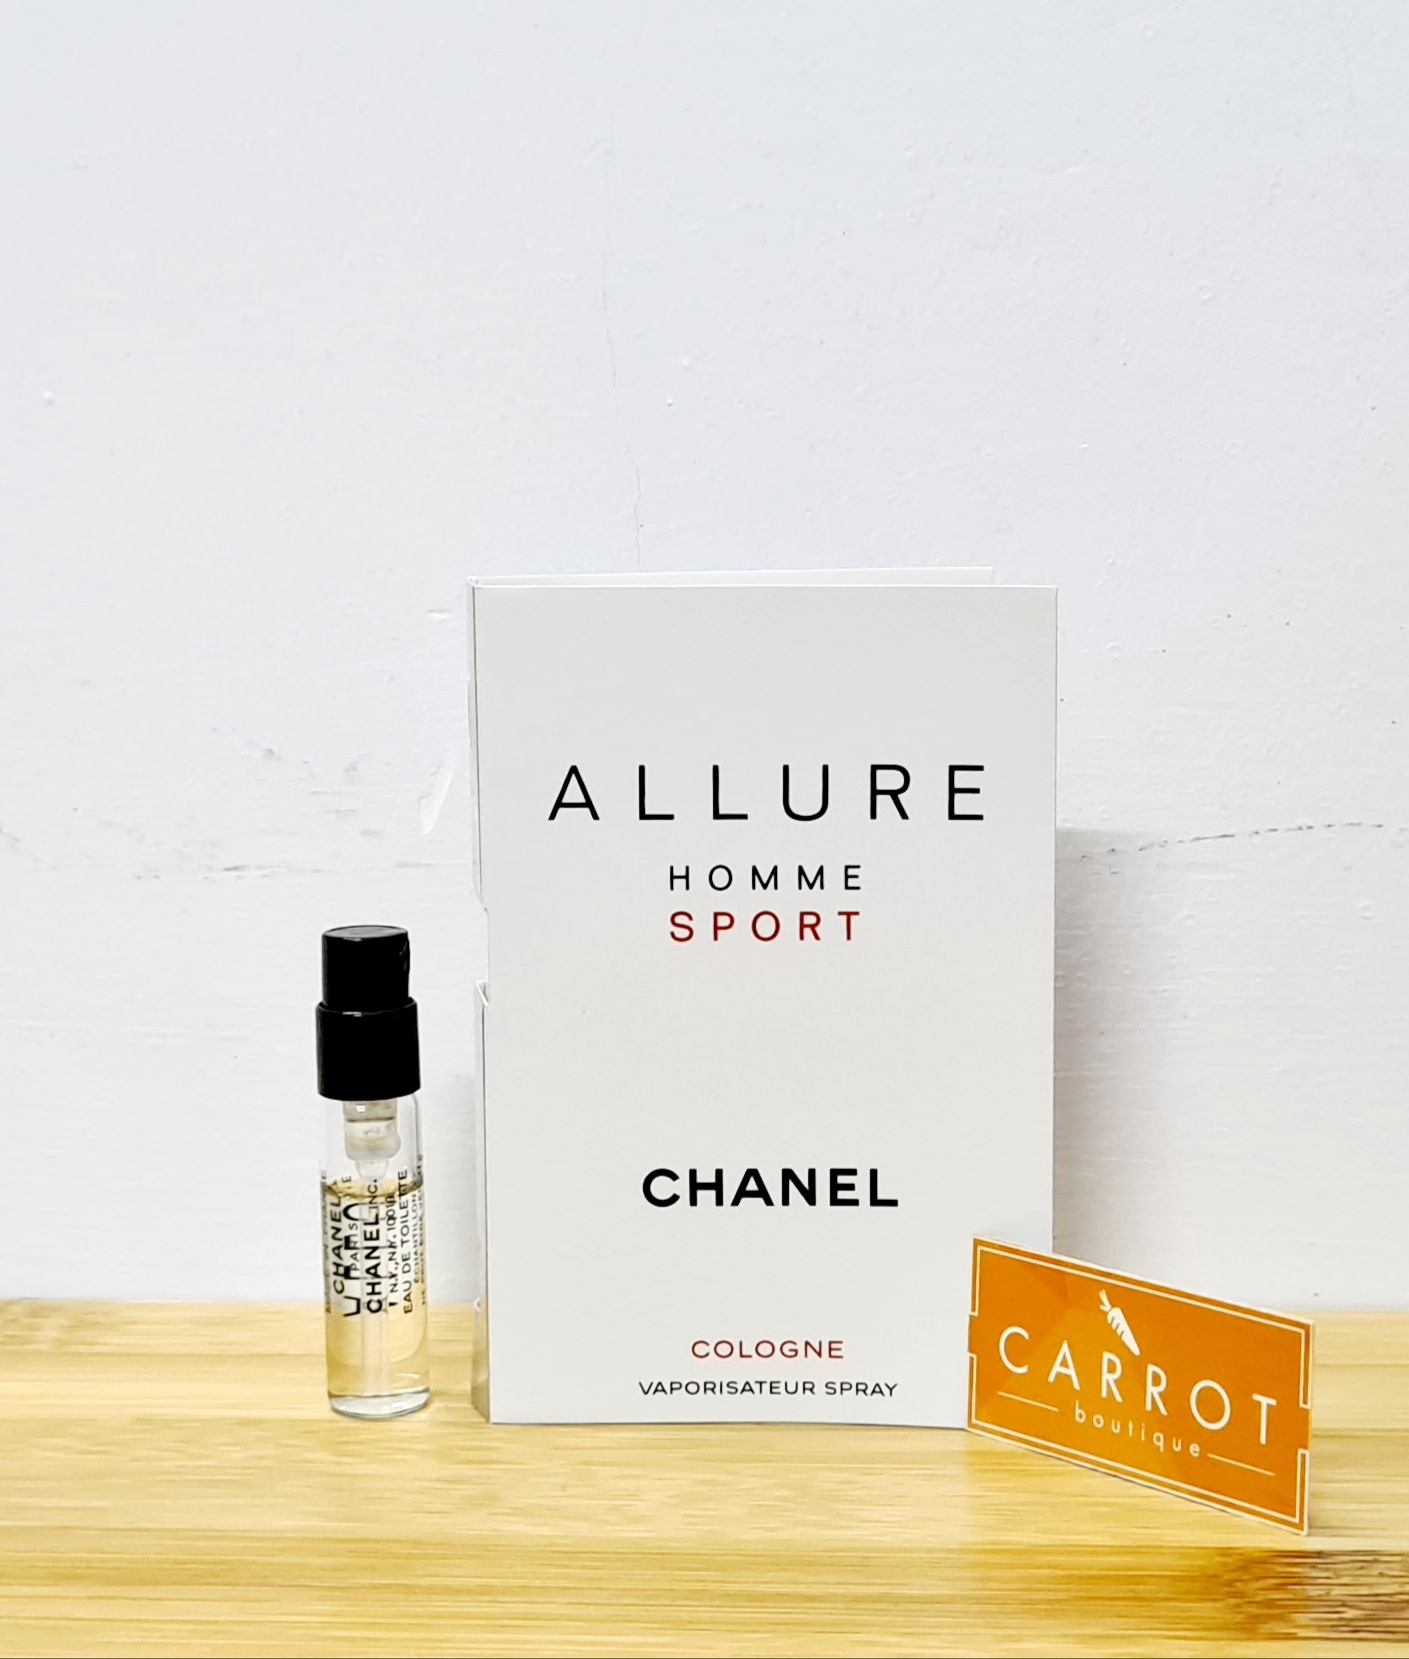 Allure Homme Sport Eau Extrême  Perfume  Fragrance  CHANEL